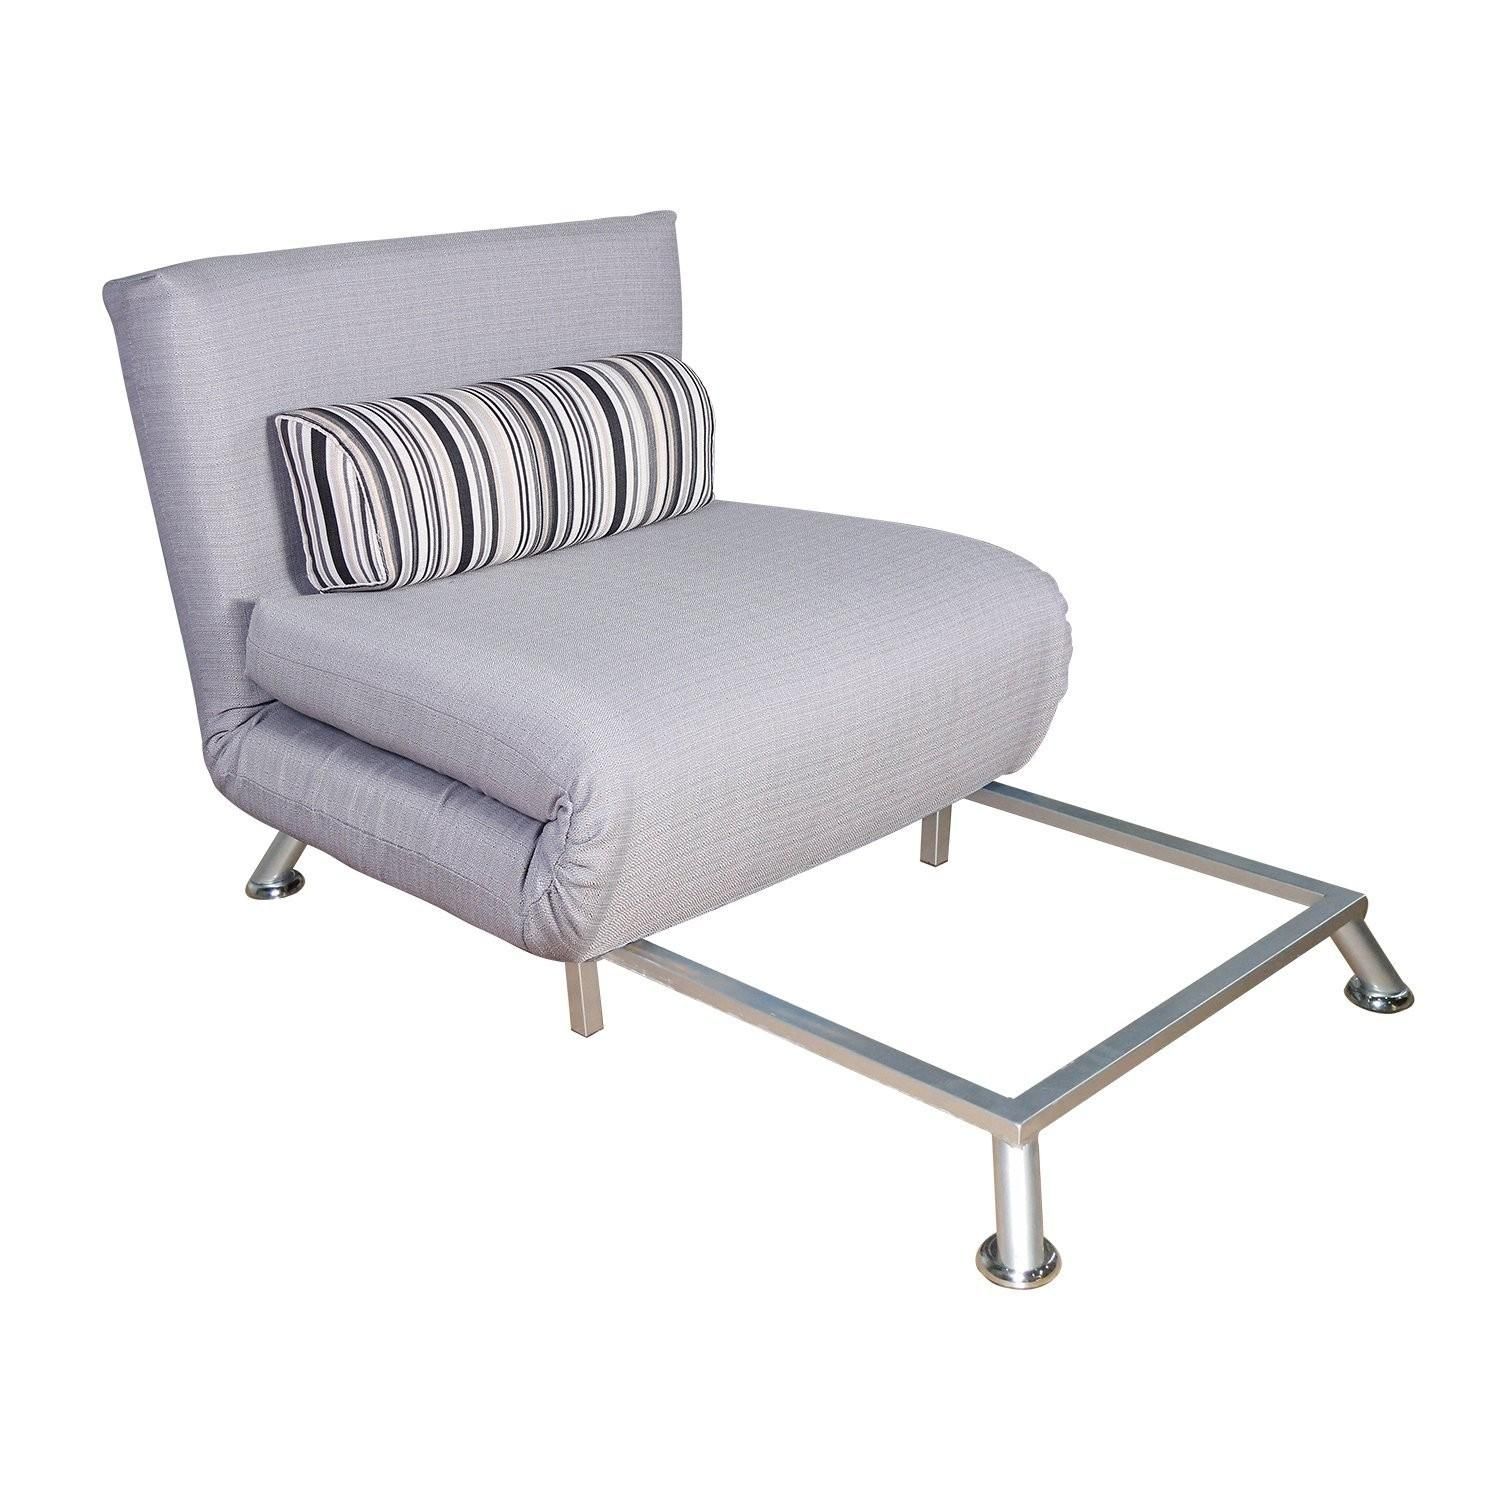 Chair Sleeper Sofas Chair Beds Ikea Single Sofa Bed Australia Regarding Single Sofa Bed Chairs (View 20 of 20)